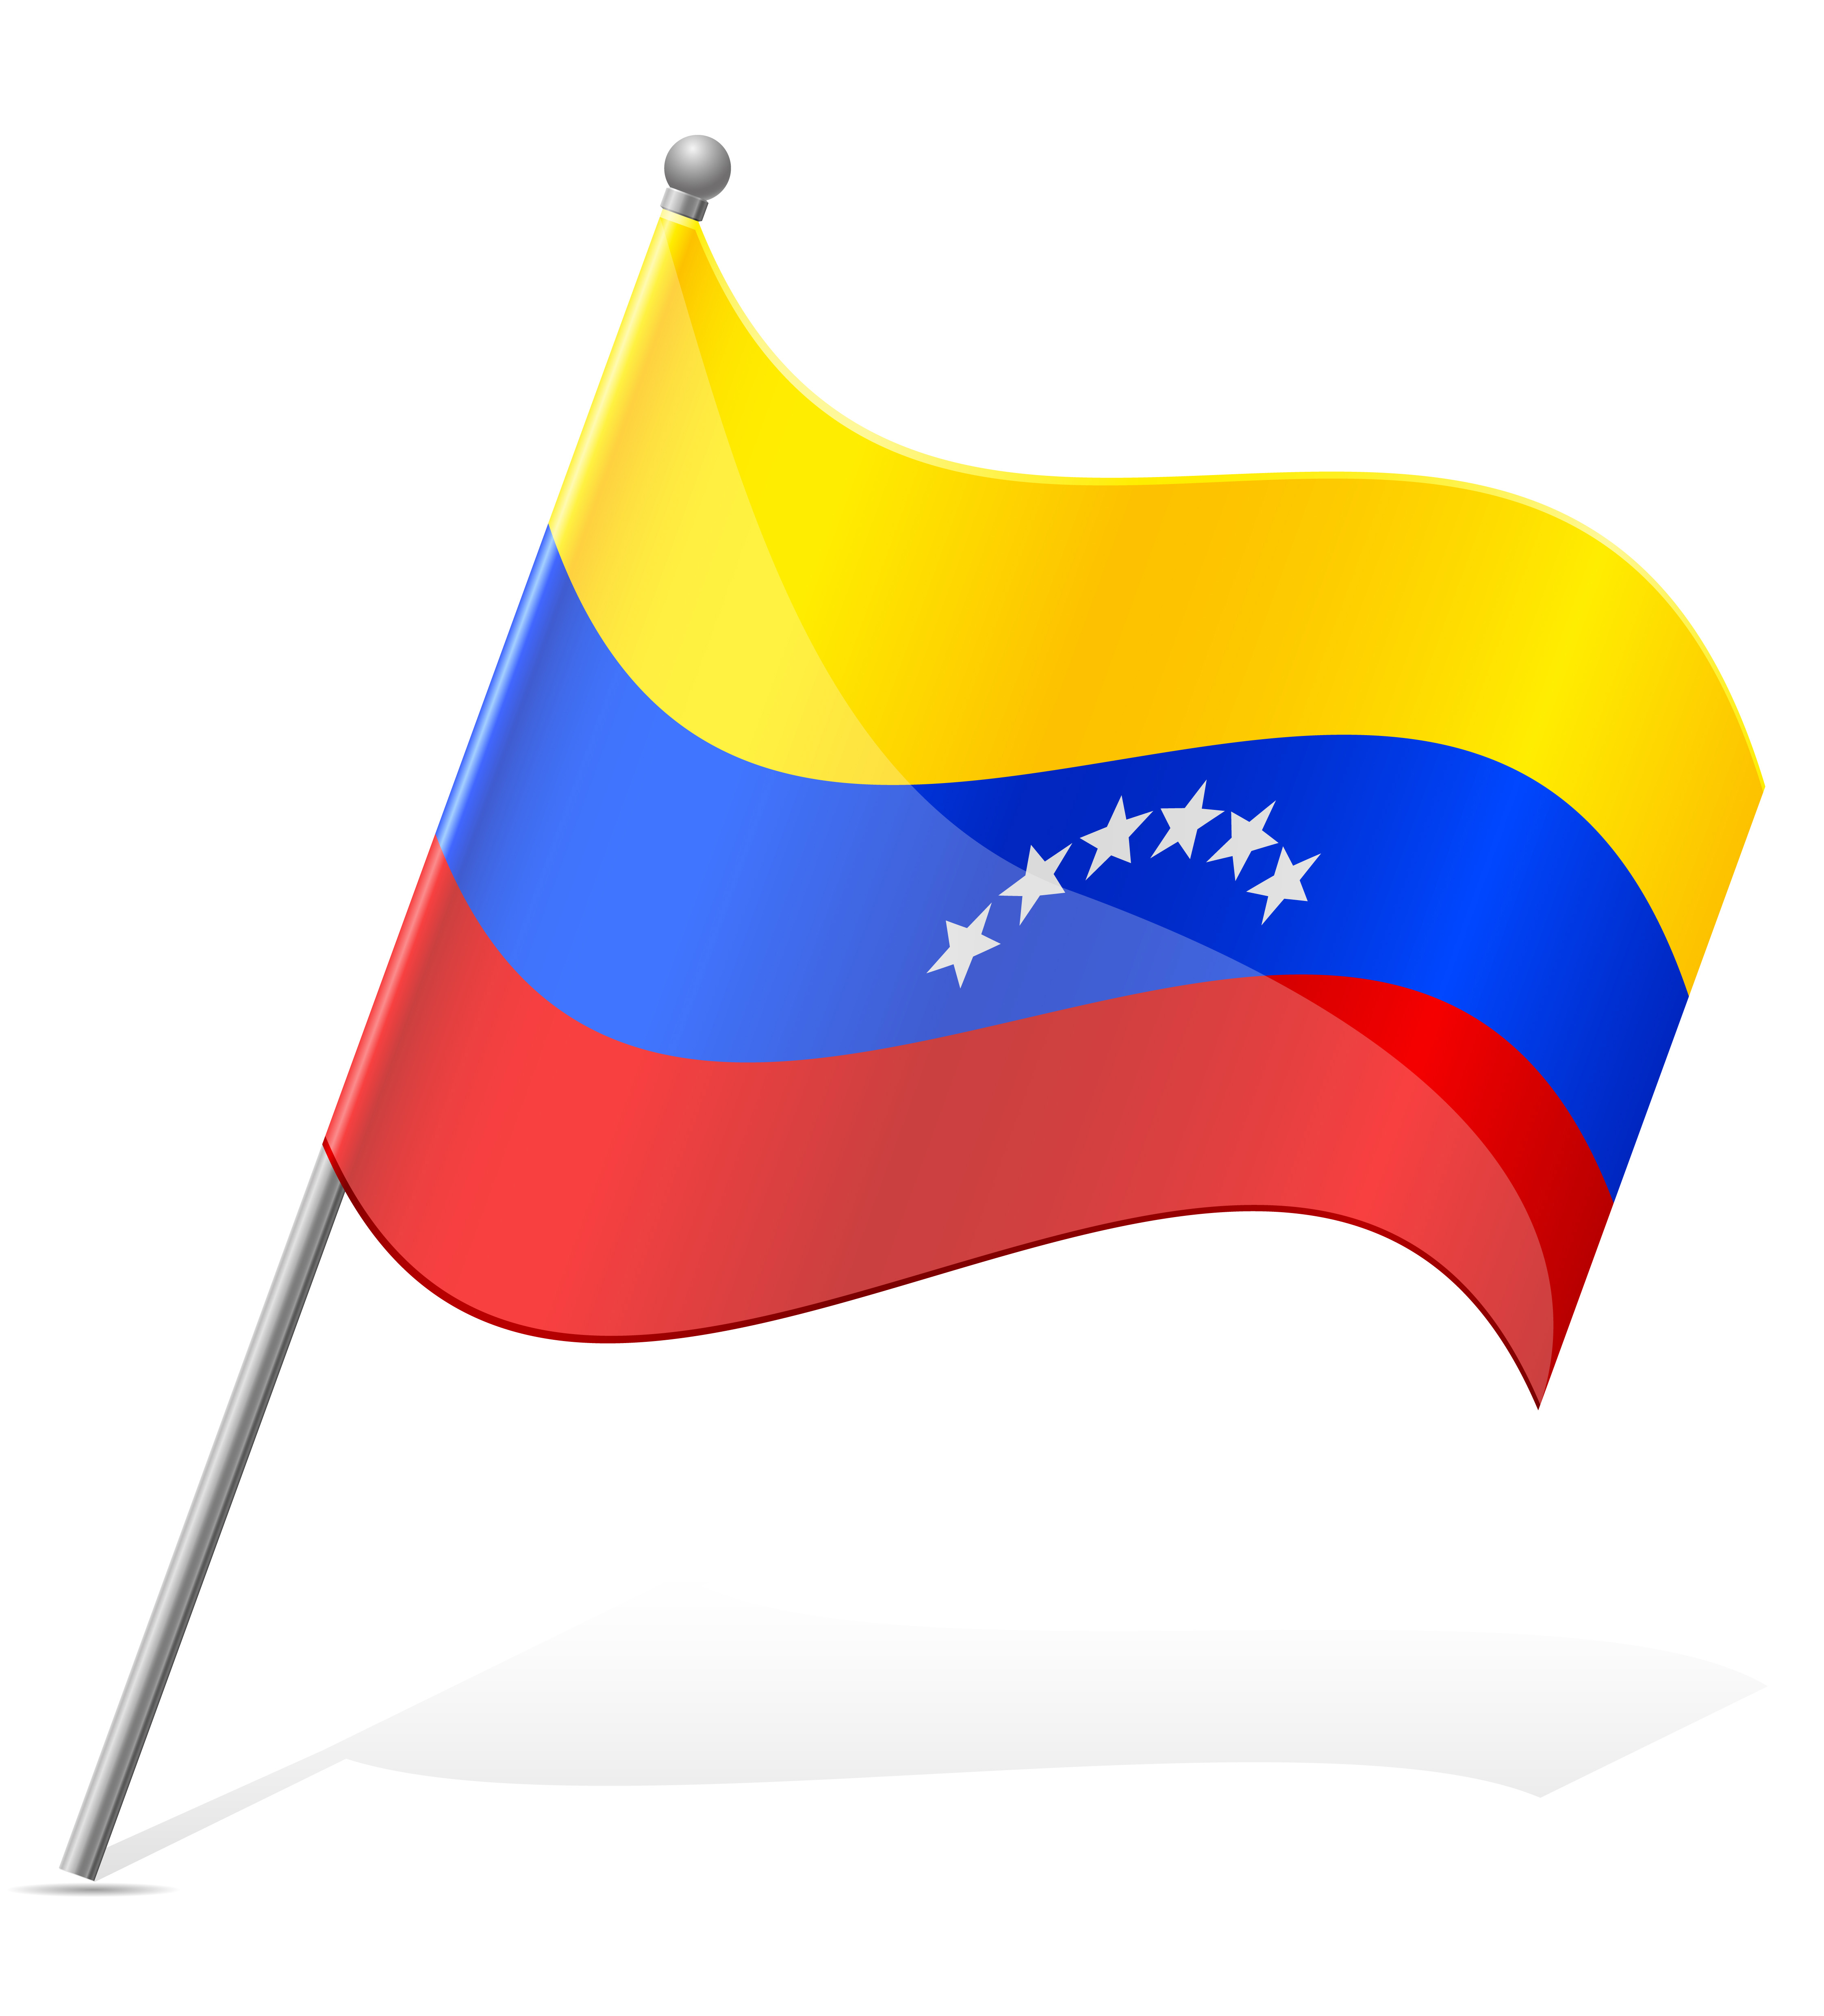 flag of Venezuela vector illustration 493322 Download Free Vectors